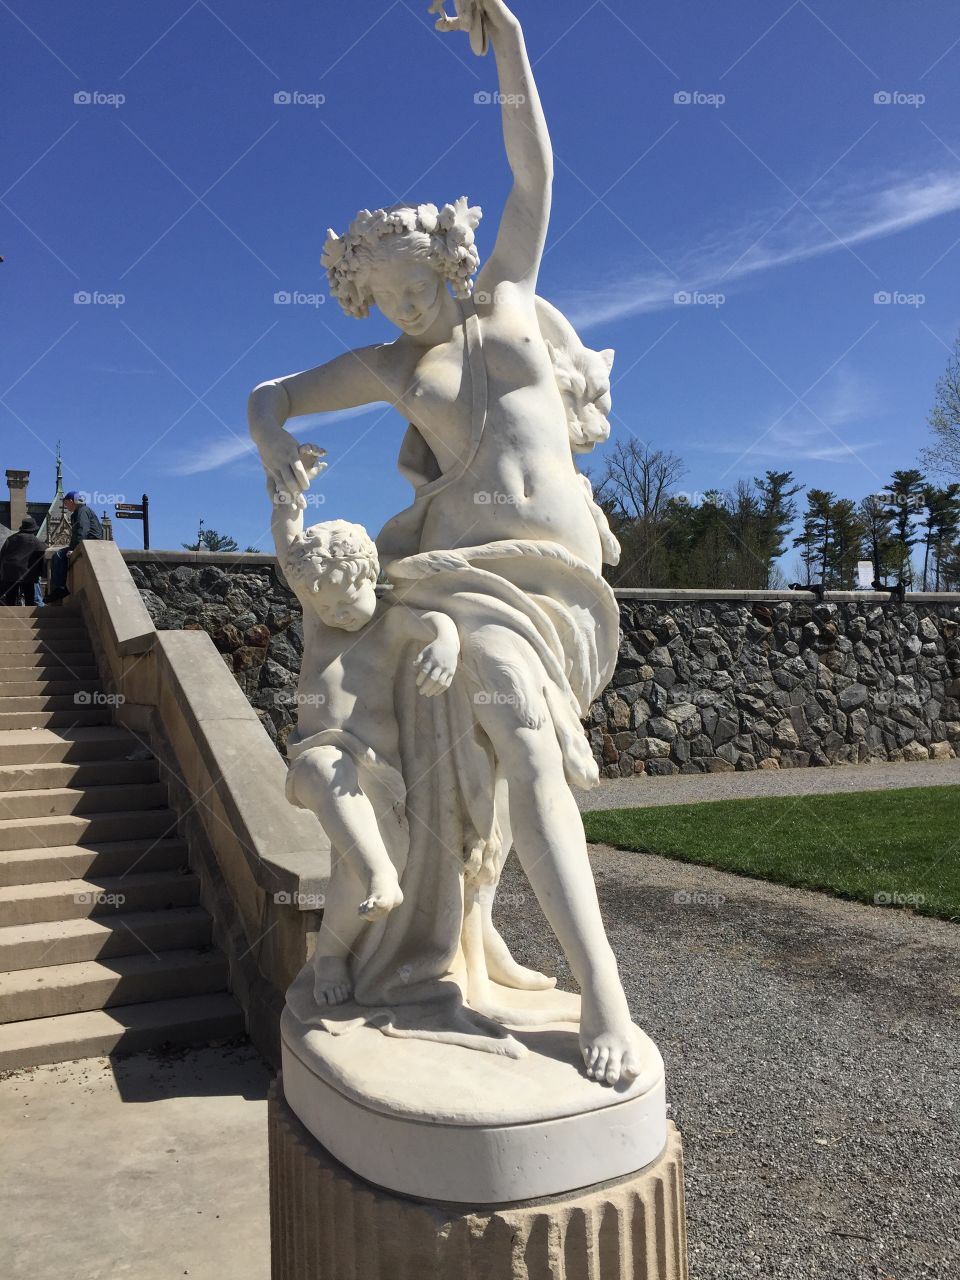 Biltmore sculpture